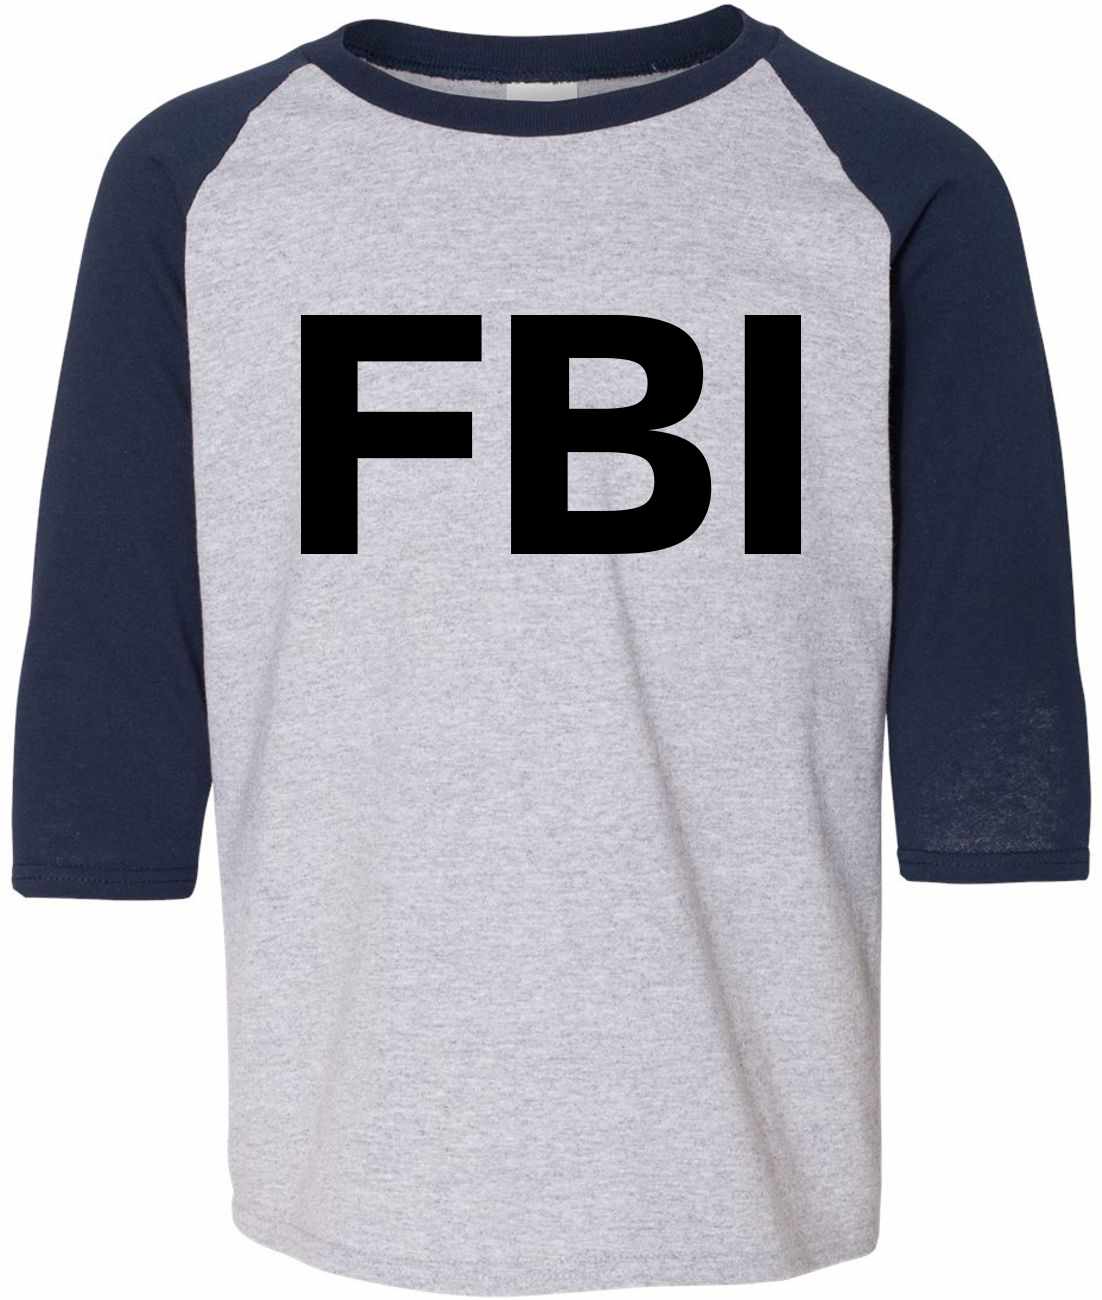 FBI on Youth Baseball Shirt (#402-212)